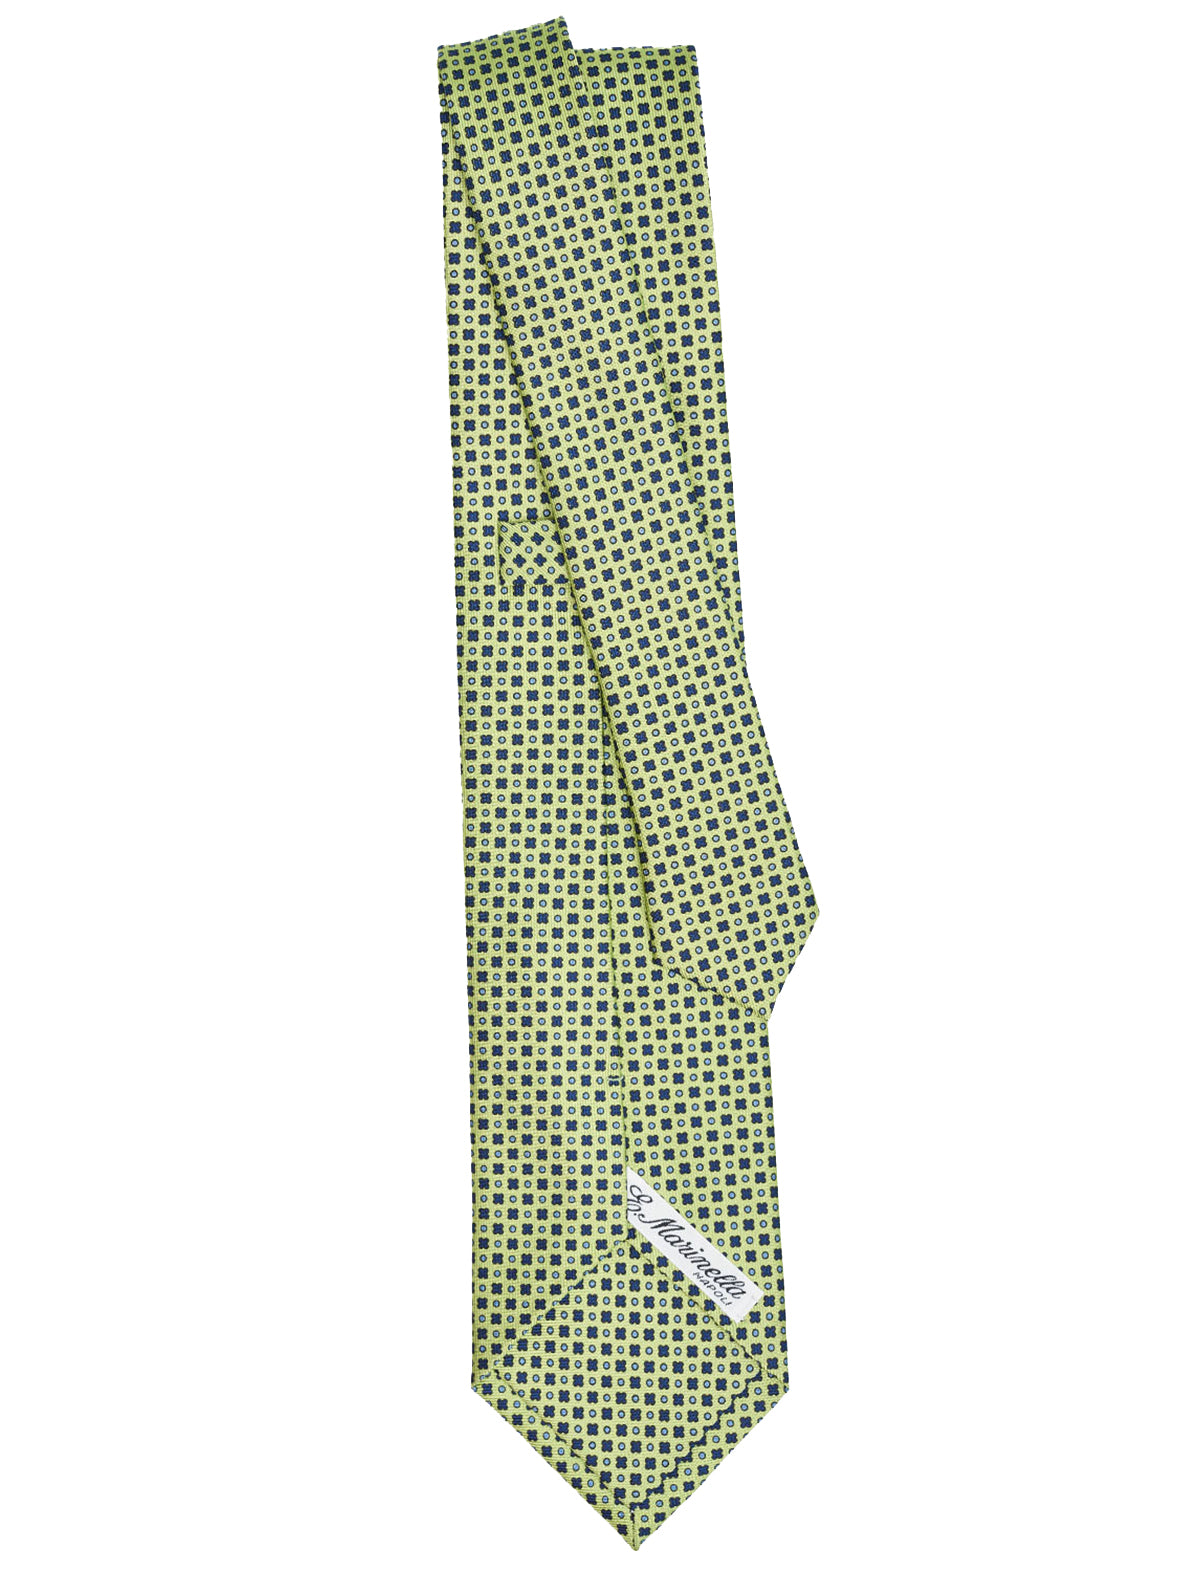 E.Marinella Hand-Printed Silk Tie in Green Floral